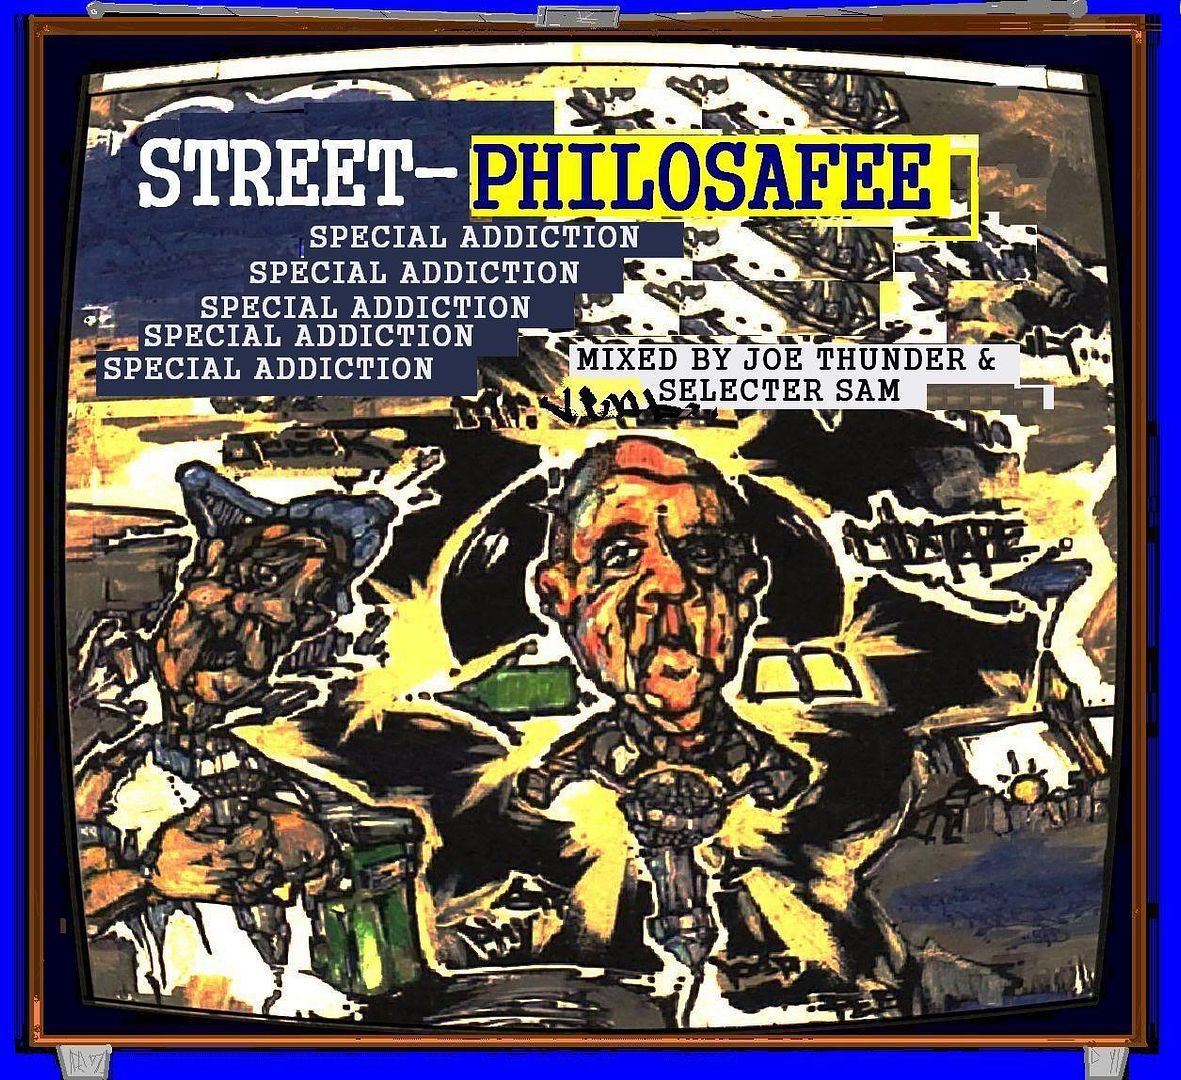 Street Philosophee Mixtape Mixed by Joe Thunder and Selector Sam